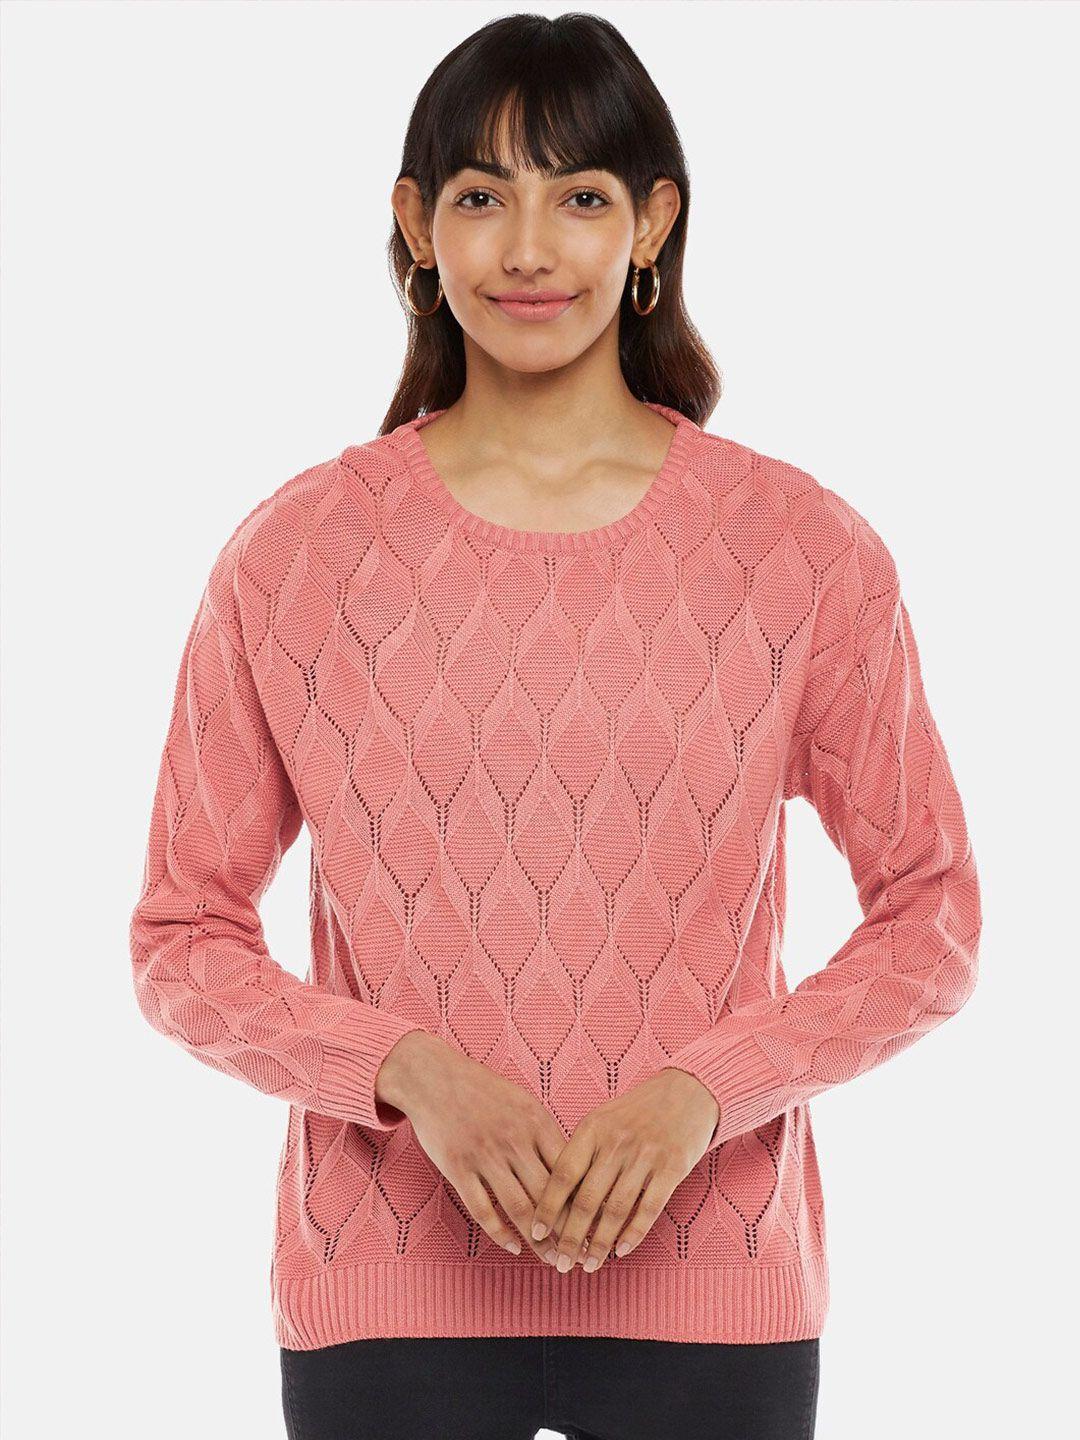 honey by pantaloons women pink round neck sweater